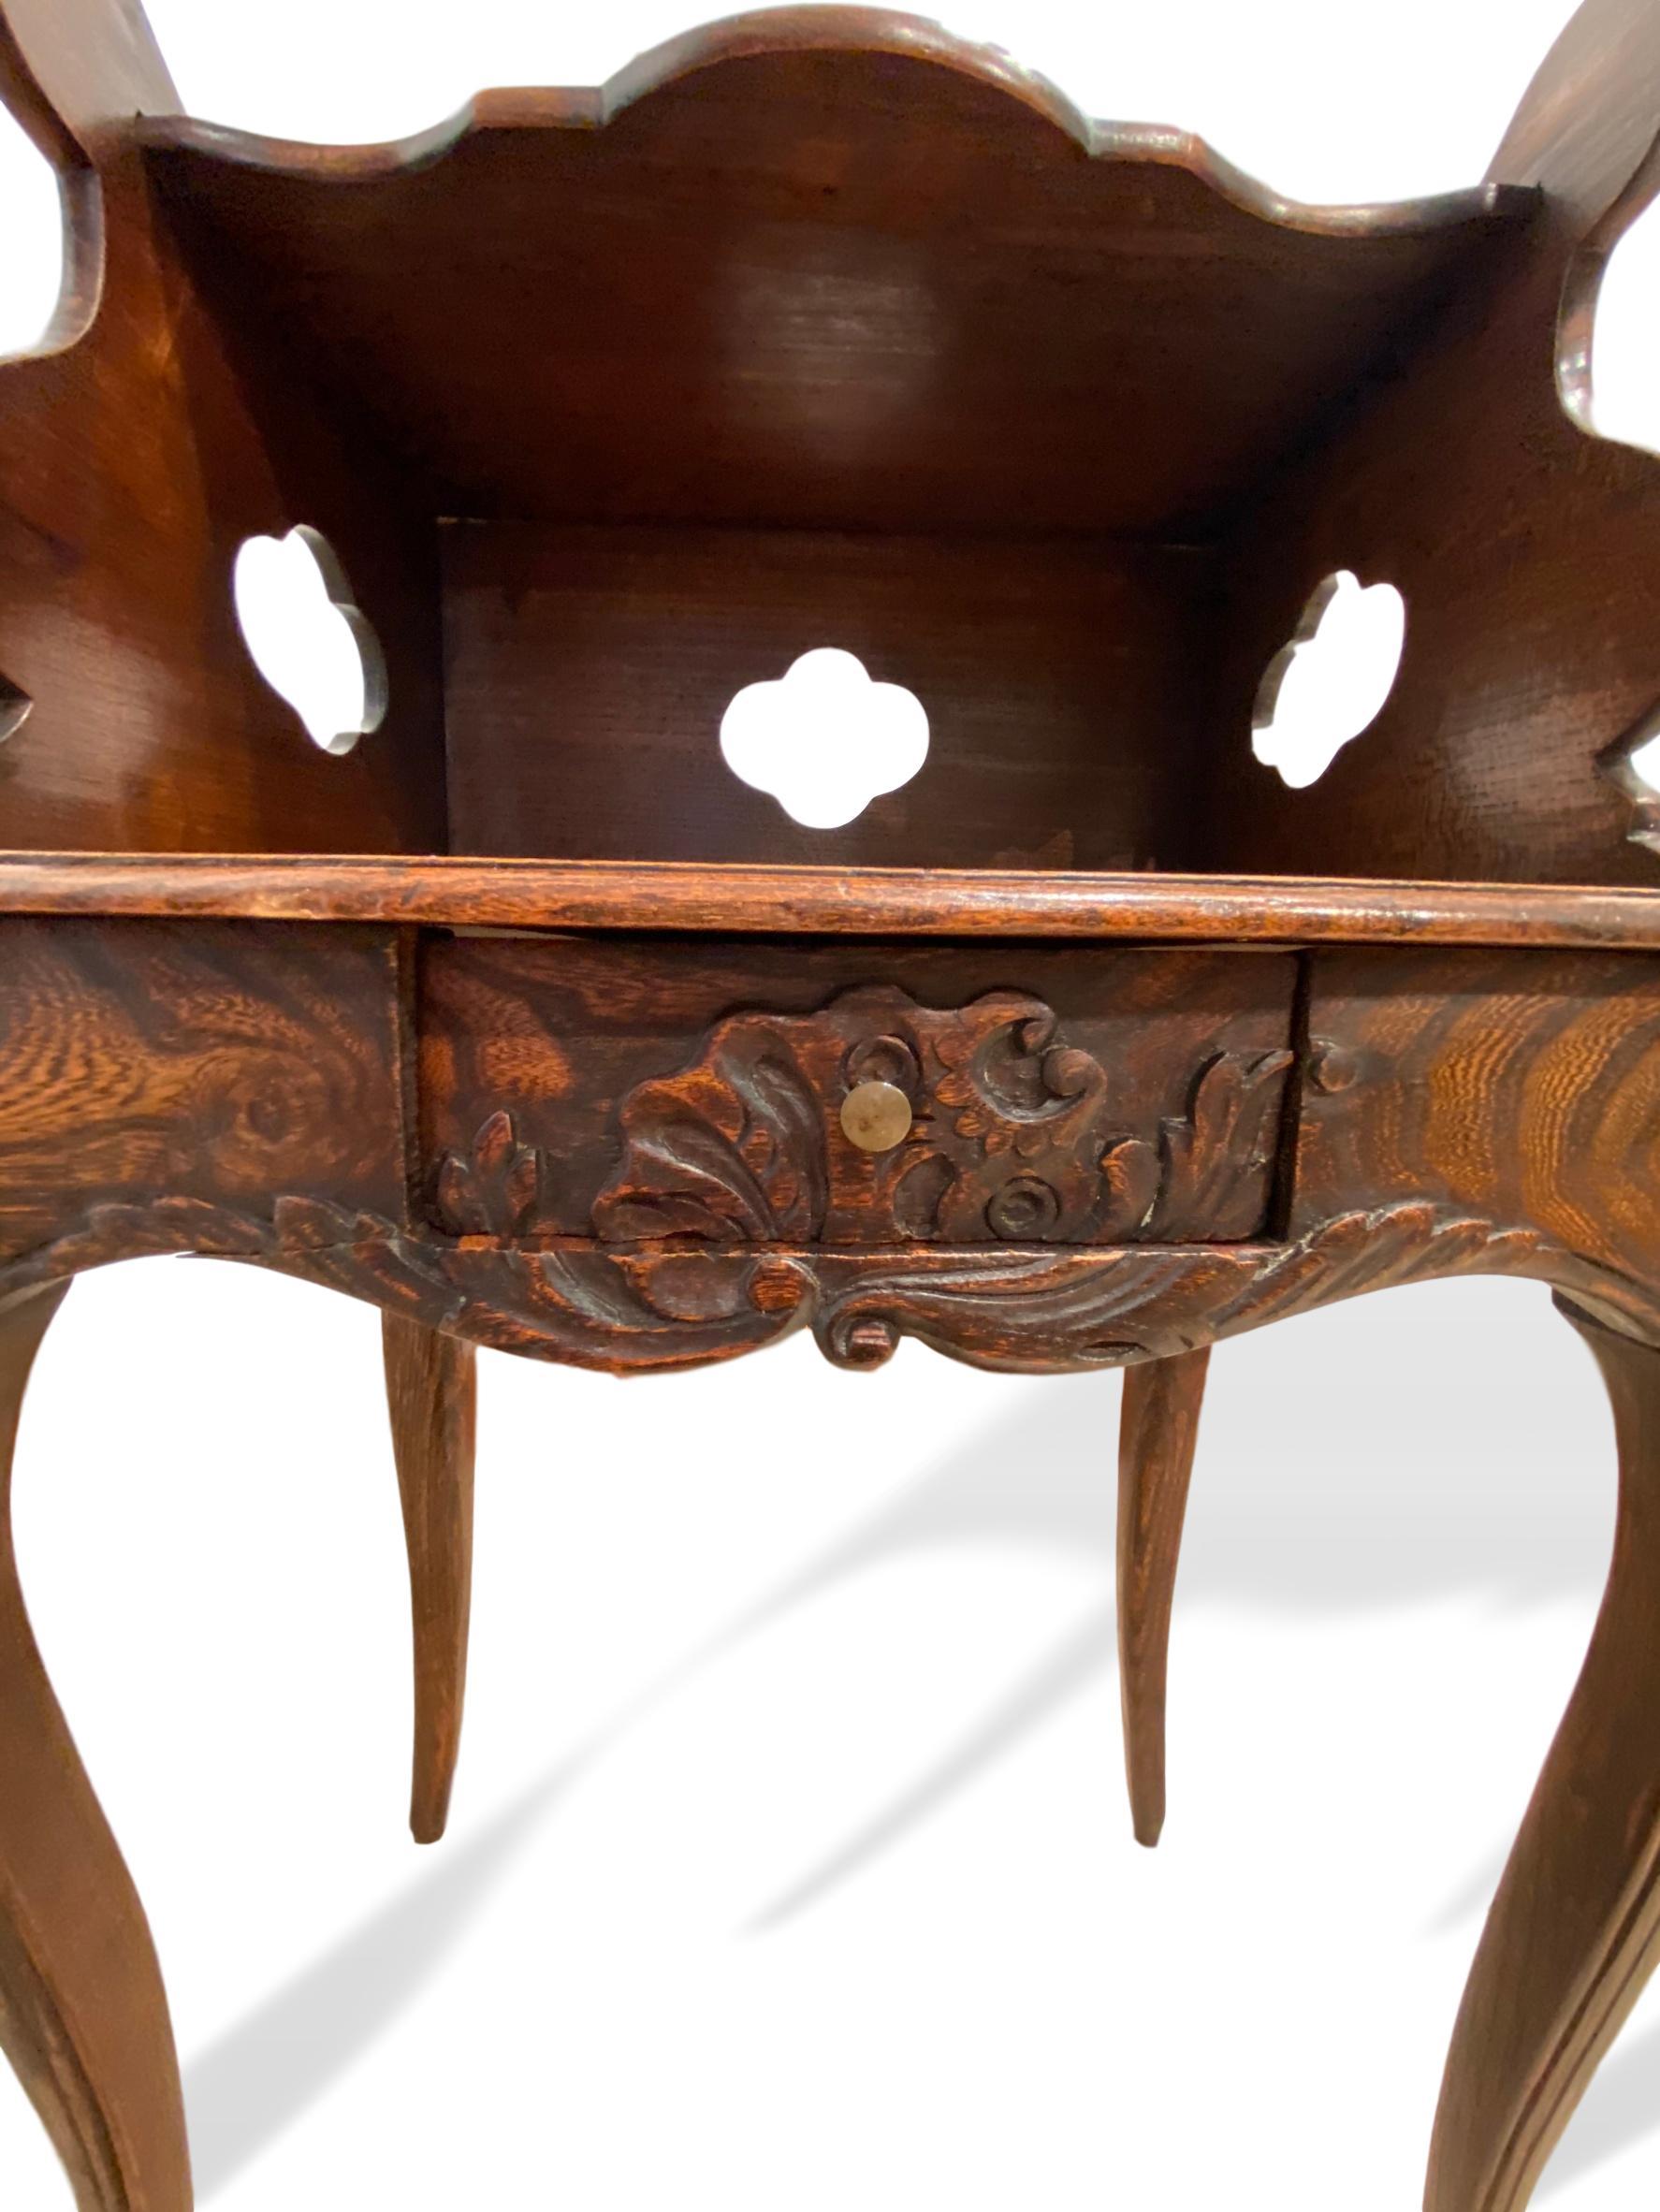 Elmwood Side Table with Gallery/Shelf, Pierced Quatrefoils, French, circa 1870 For Sale 4